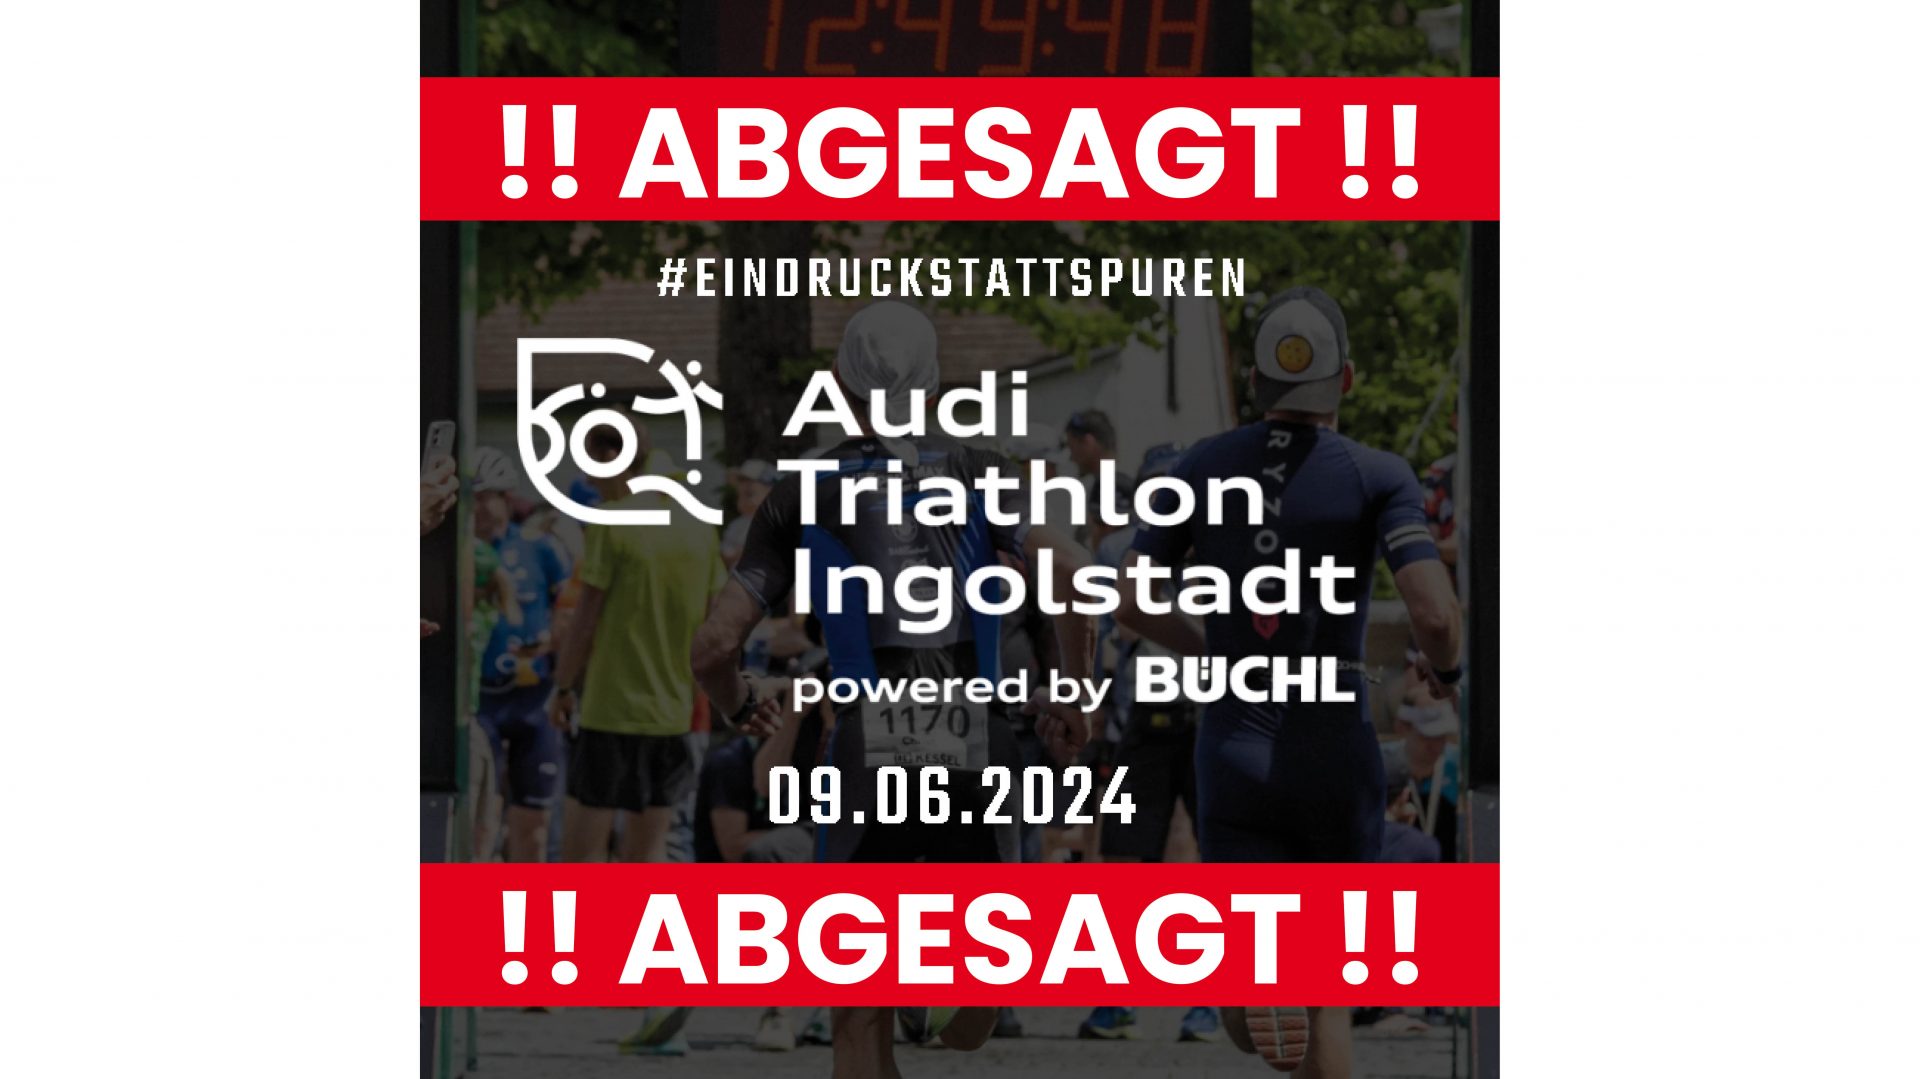 Triathlon 9. Juni 2024 – !! ABGESAGT !! – Neuer Termin 2024 in Planung